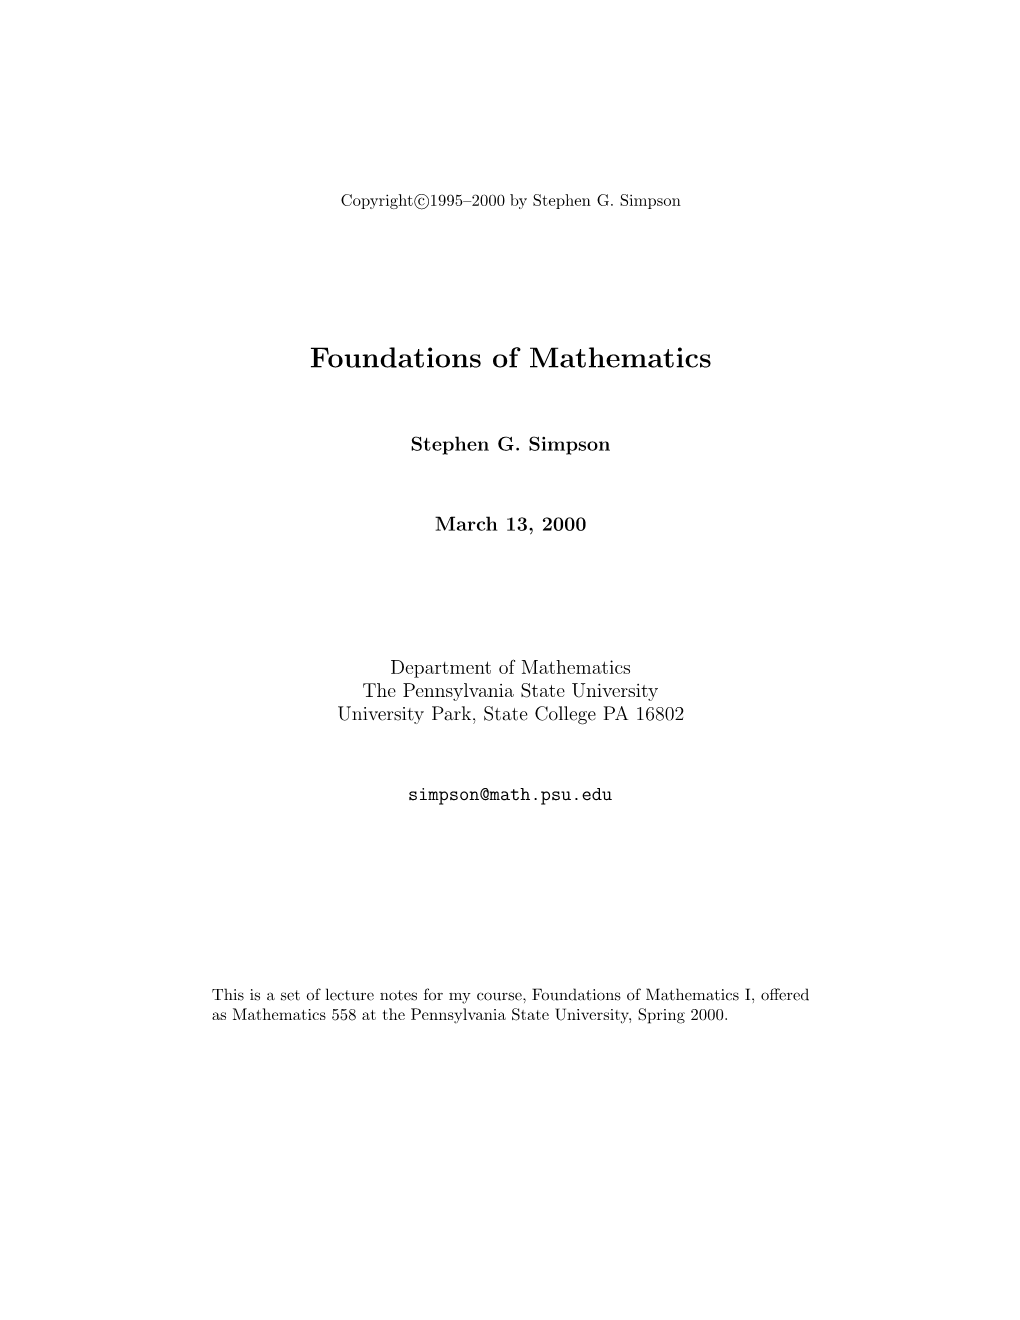 Foundations of Mathematics.Pdf